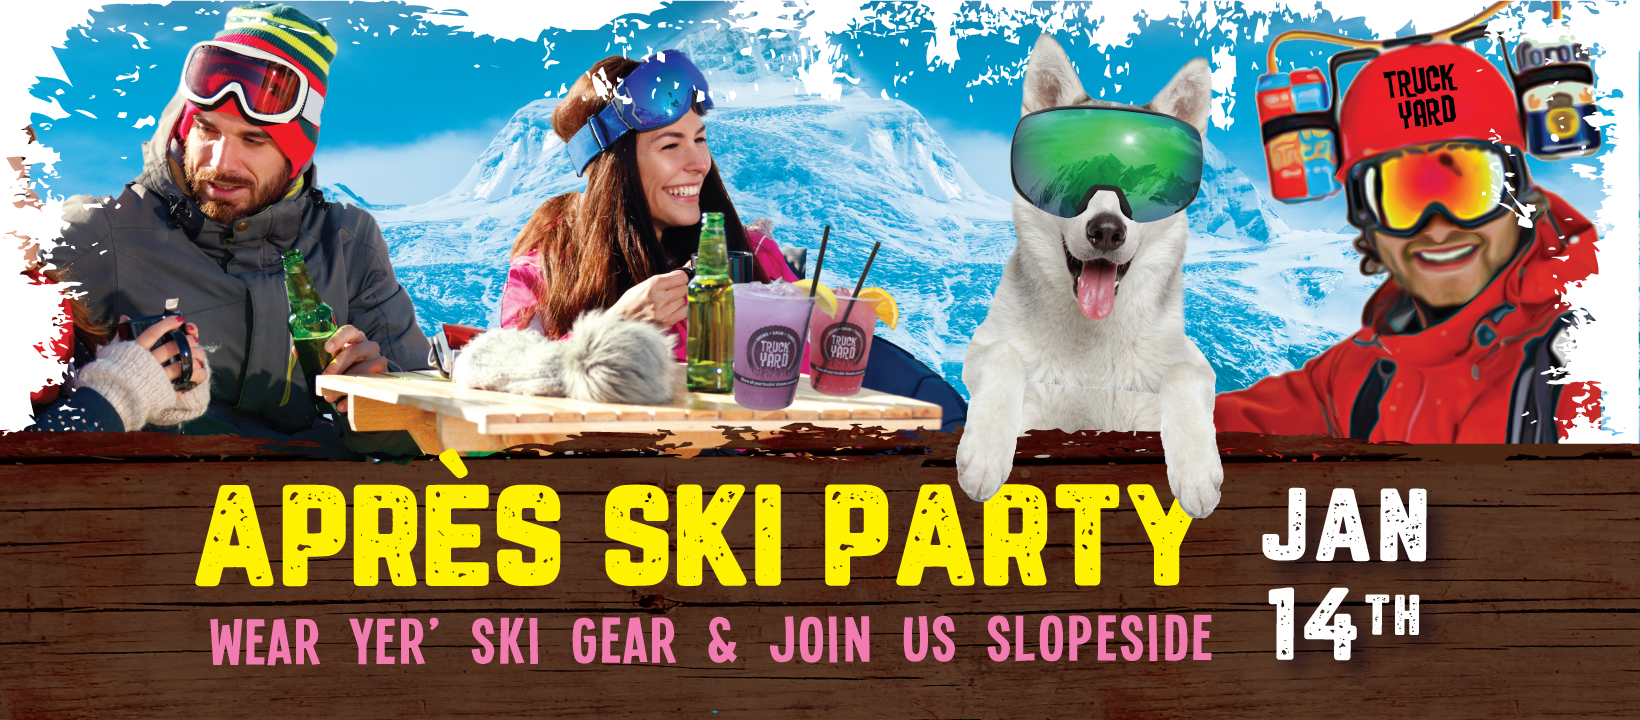 Apres Ski Party at Truck Yard - Grandscape